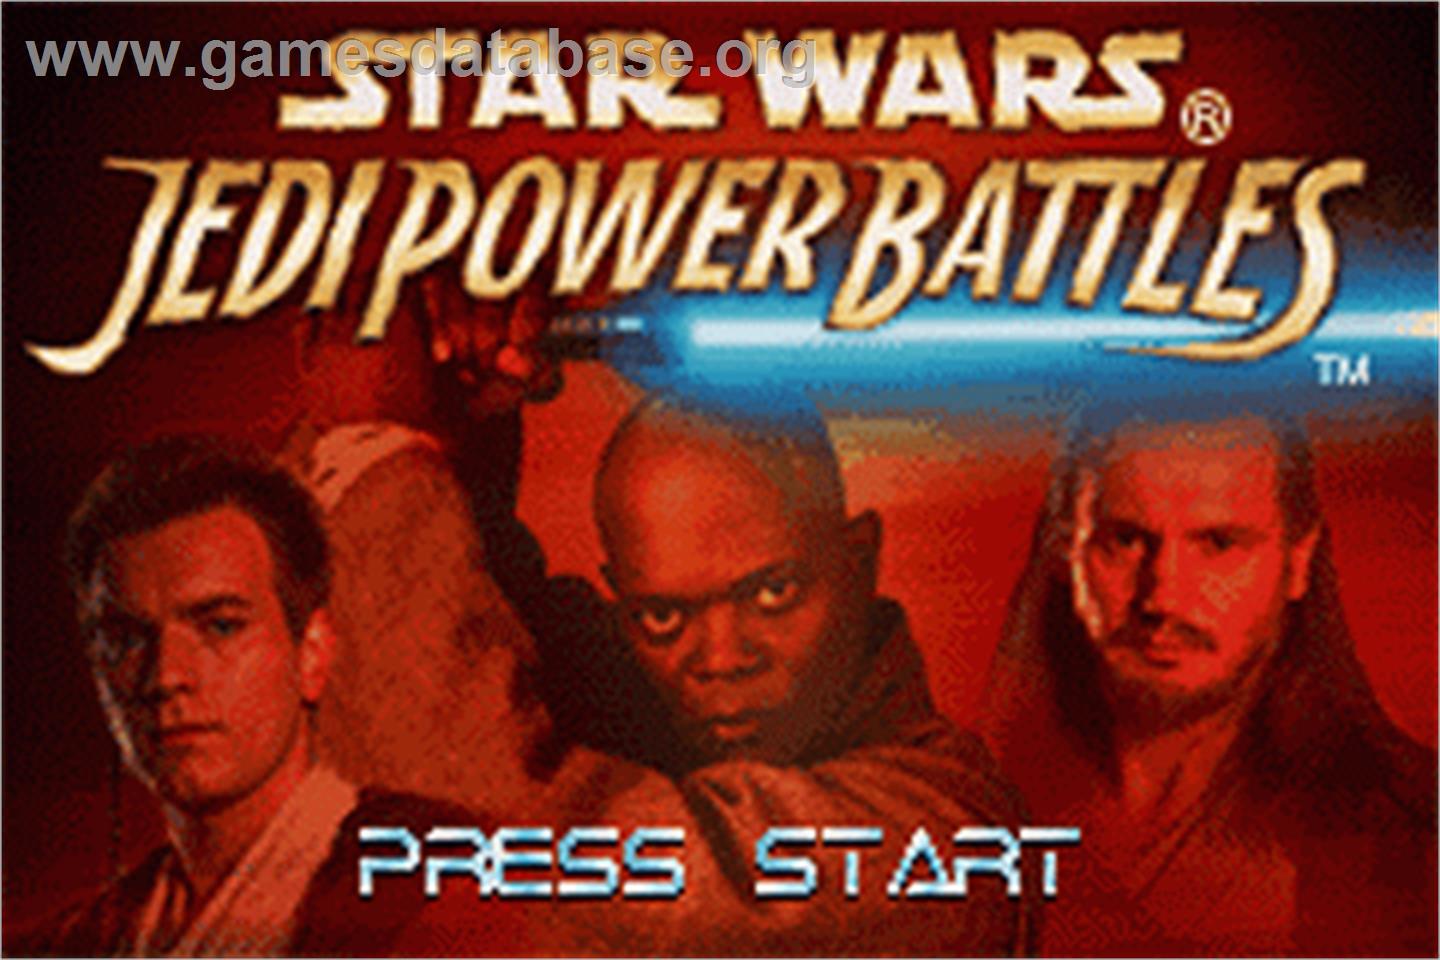 Star Wars: Episode I - Jedi Power Battles - Nintendo Game Boy Advance - Artwork - Title Screen